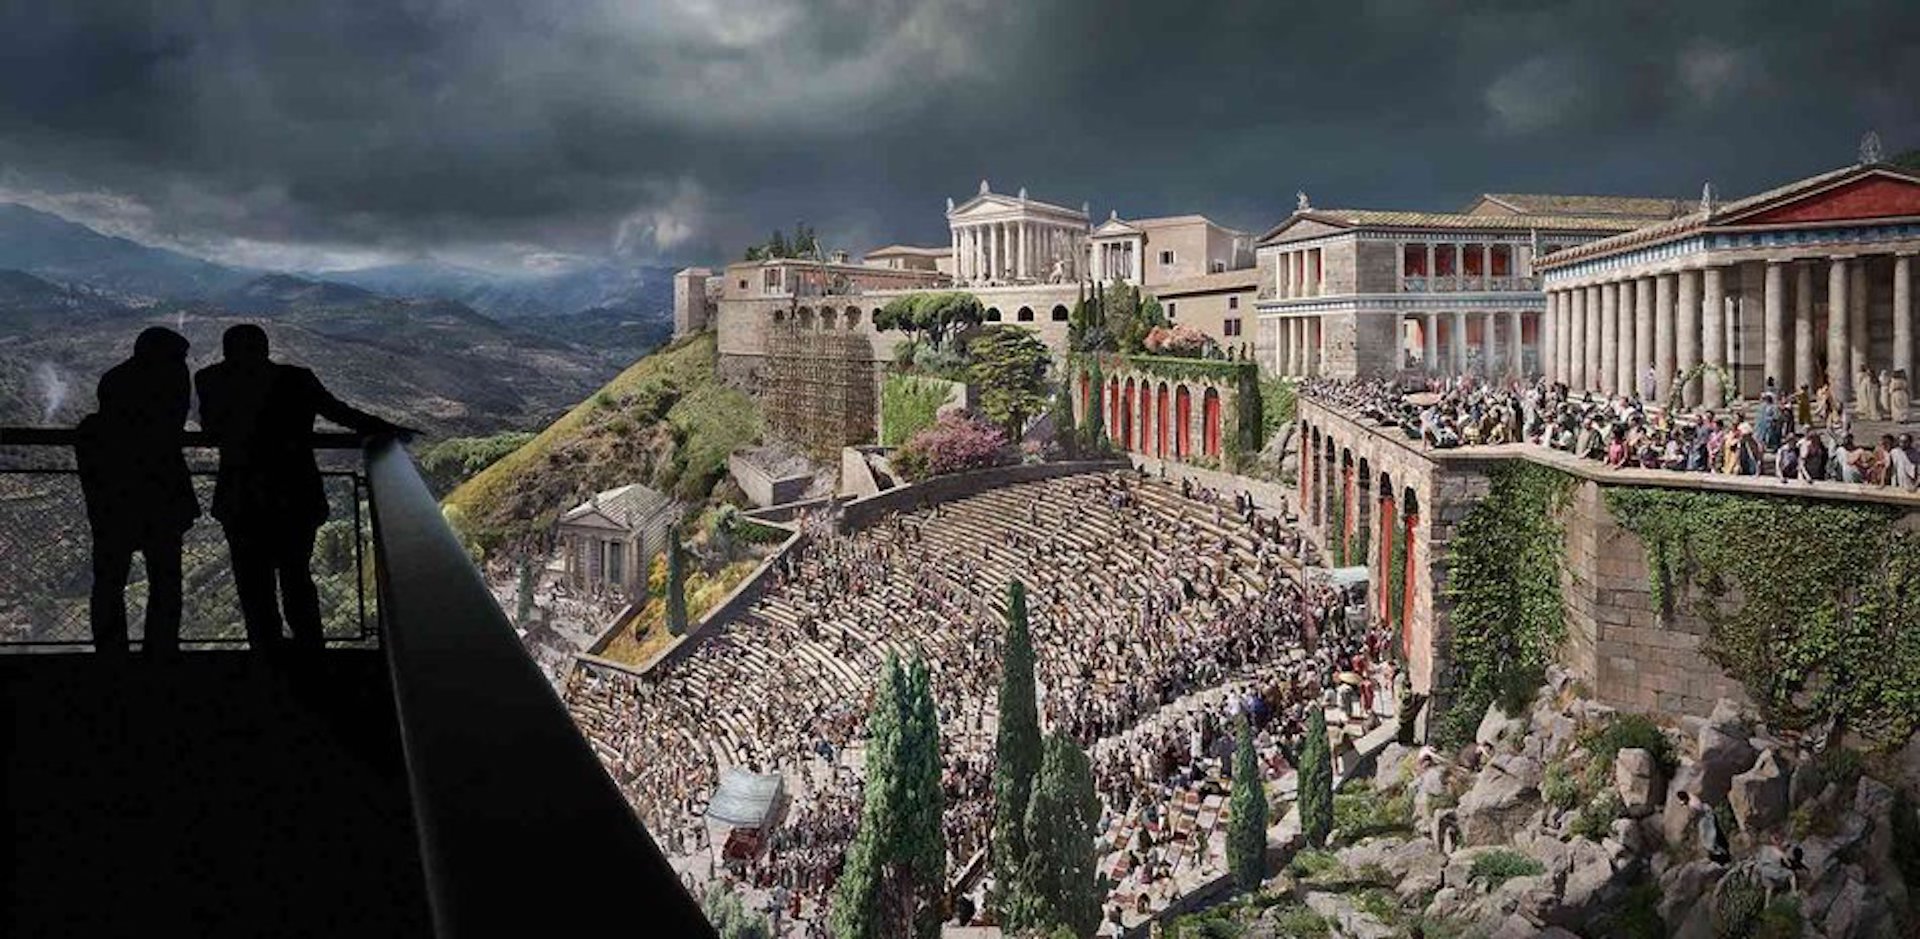 Besucherplattform im Pergamonmuseum. Das Panorama